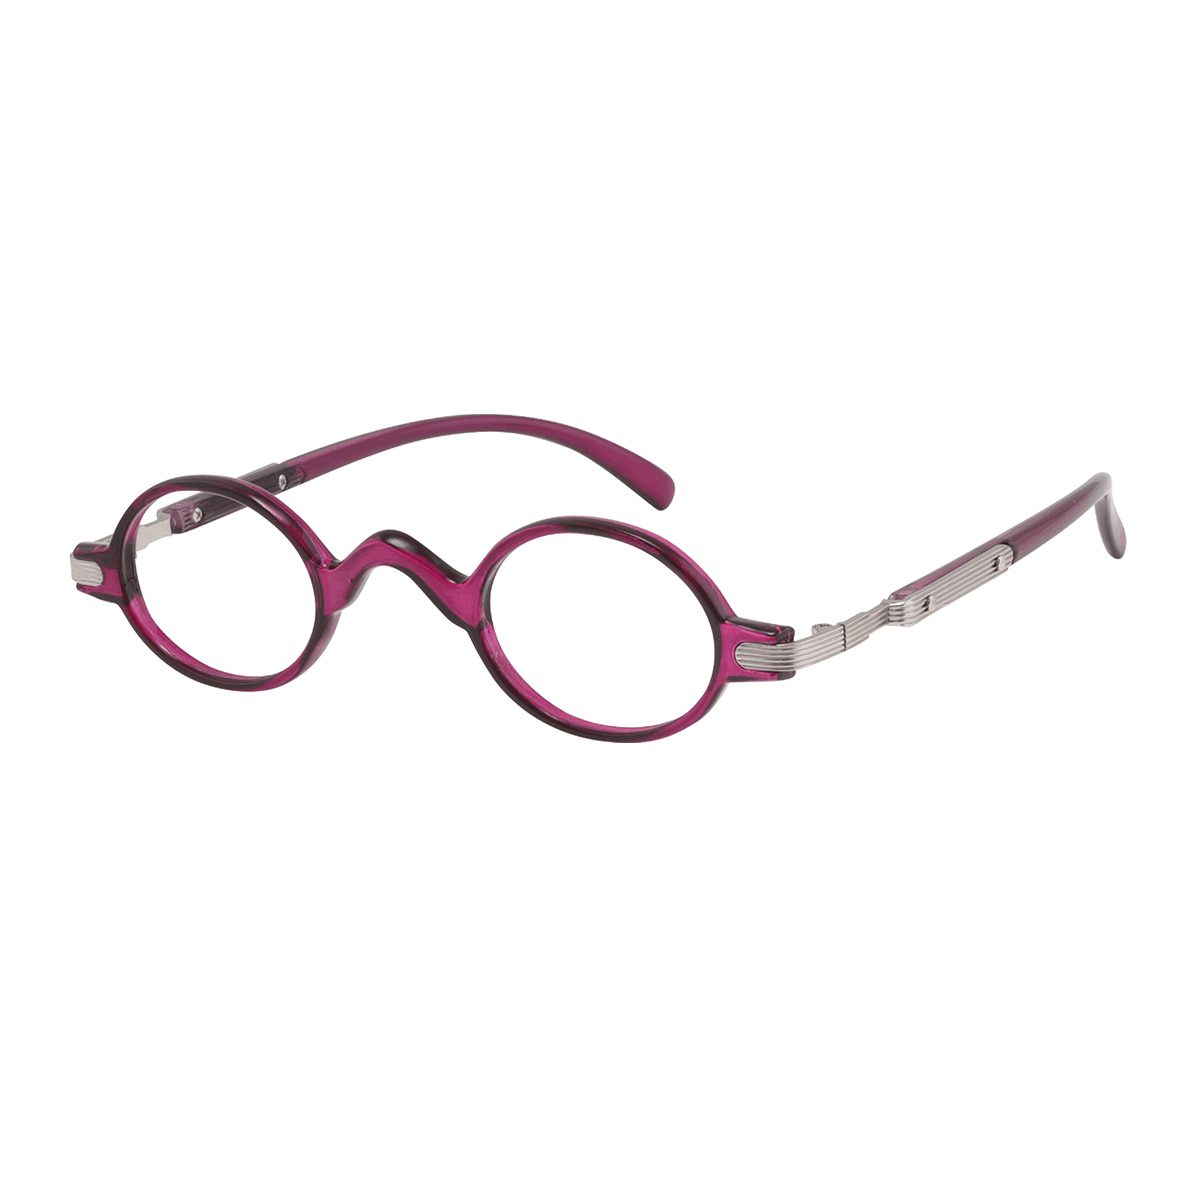 Dodona - Round Transparent-Purple Reading Glasses for Men & Women